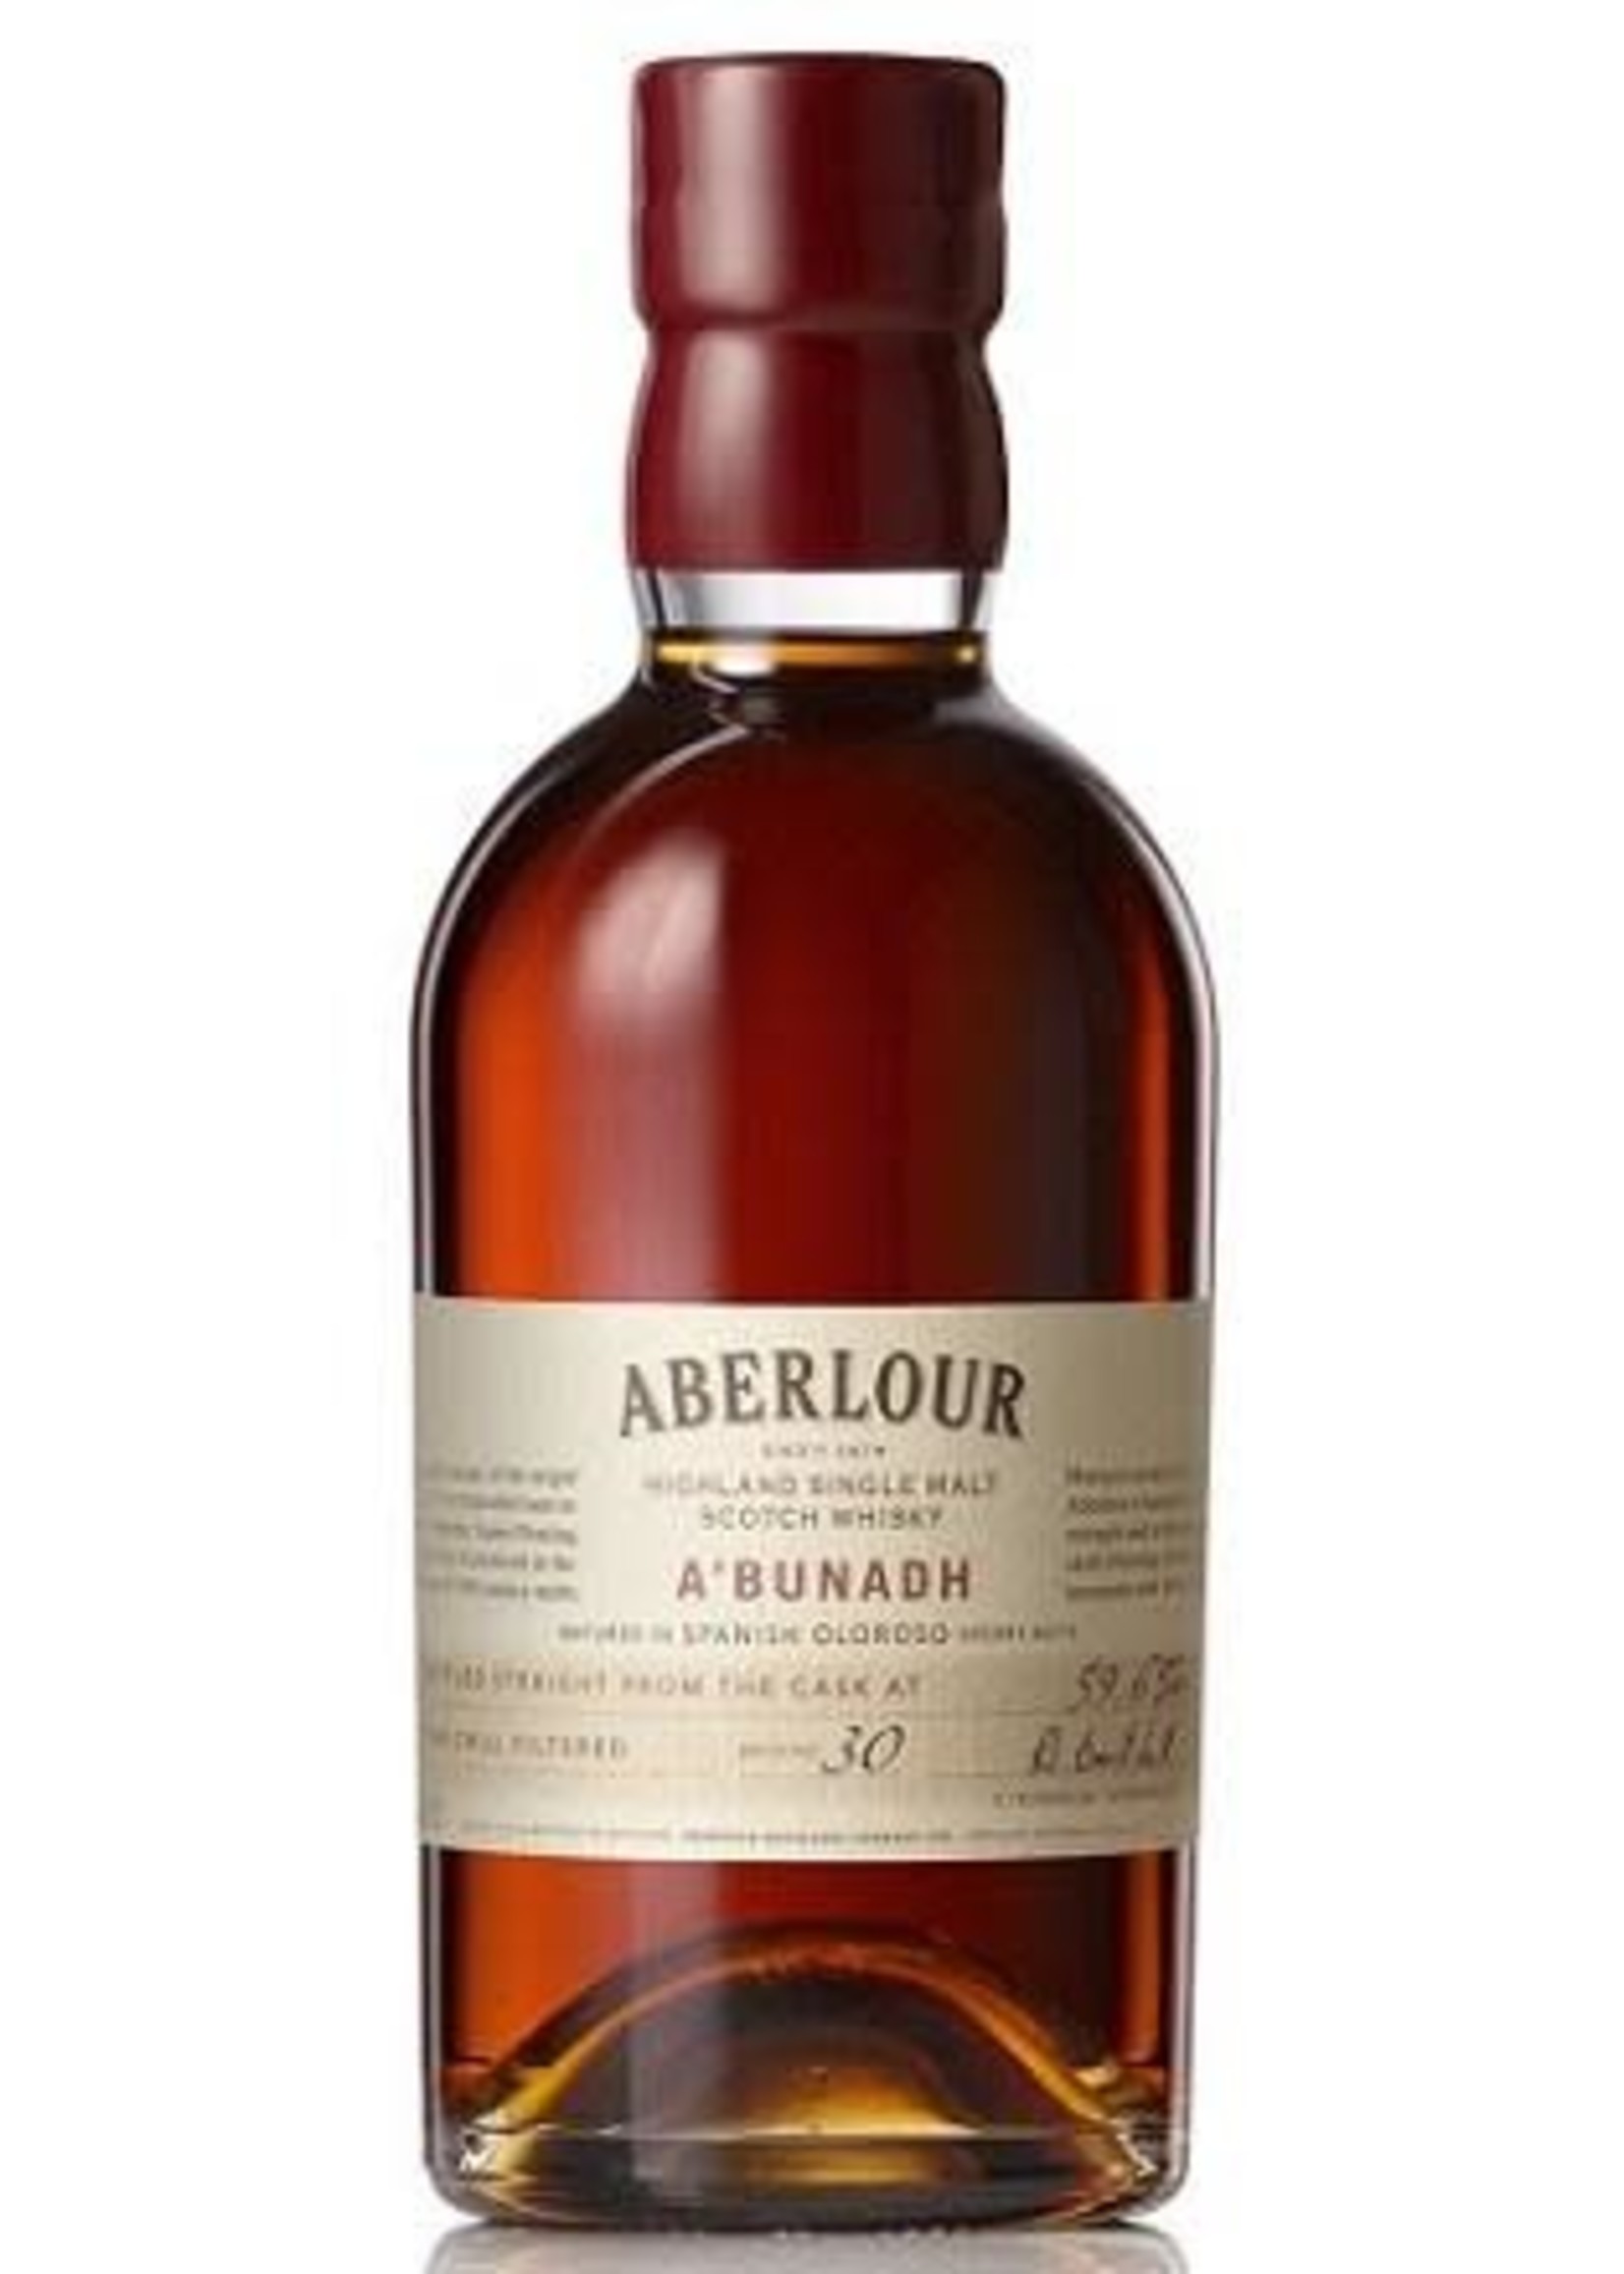 Aberlour Aberlour / A'Bunadh Cask Strength Single Malt Scotch Whisky / 750mL